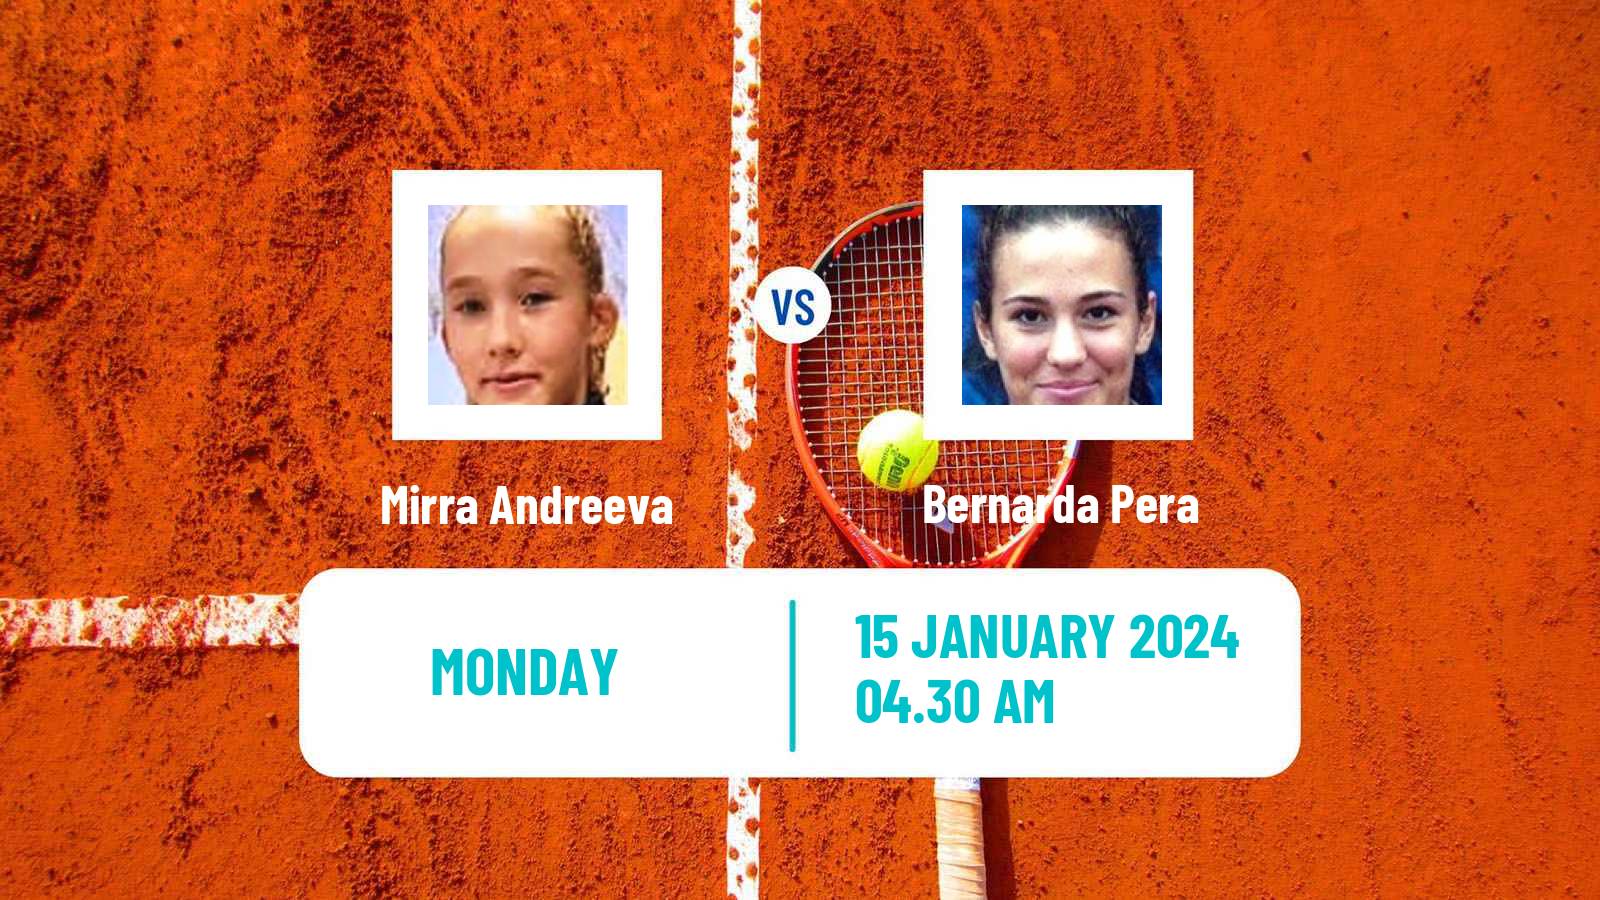 Tennis WTA Australian Open Mirra Andreeva - Bernarda Pera